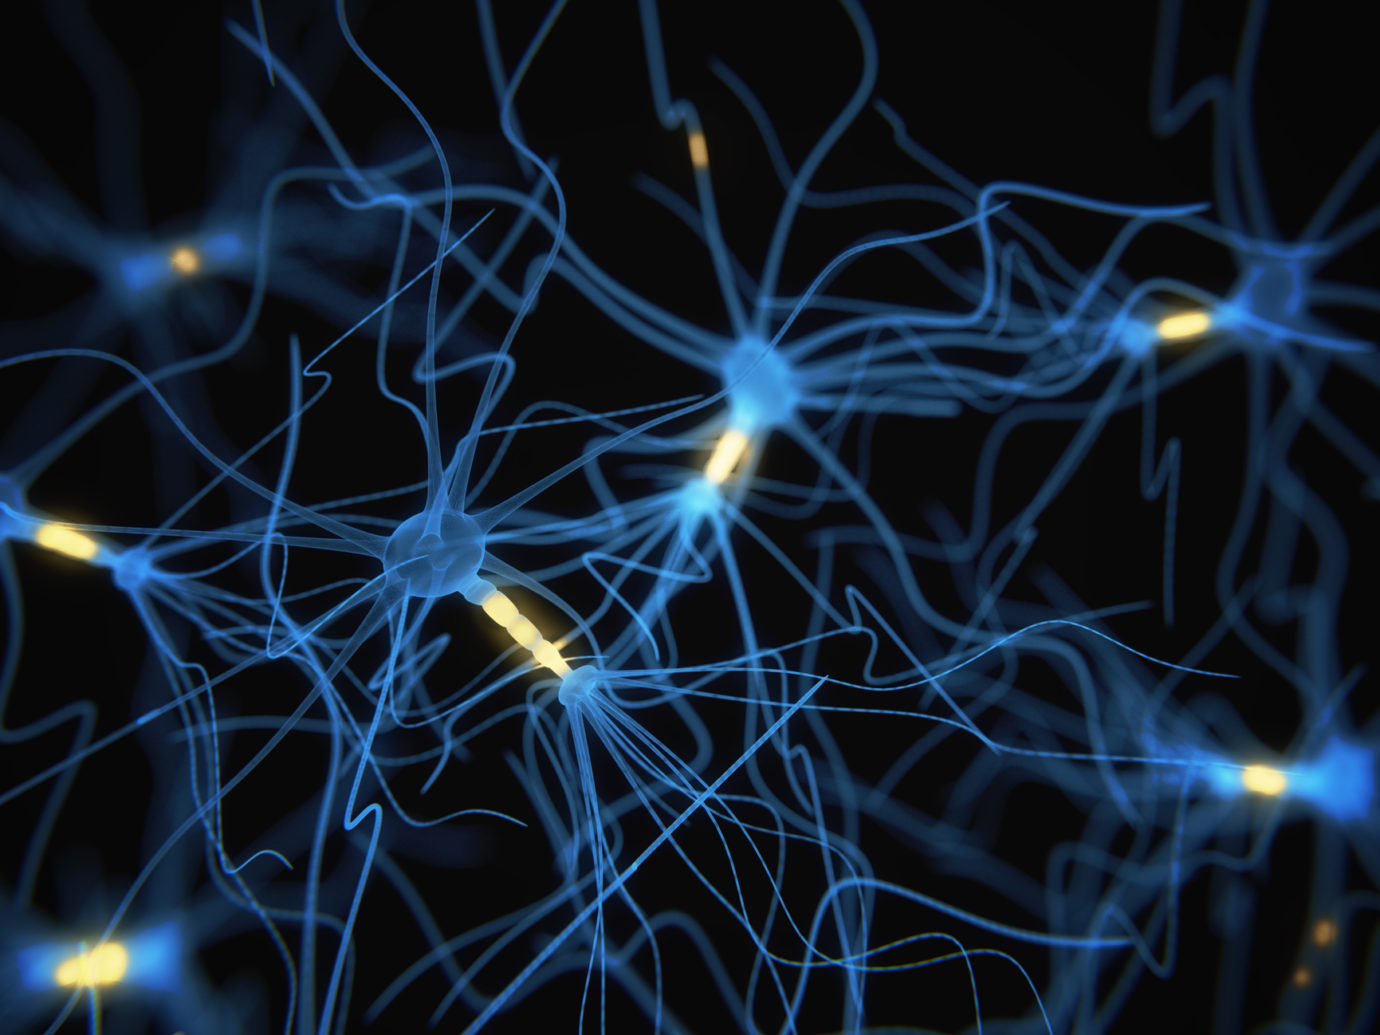 Neuron cells network on black